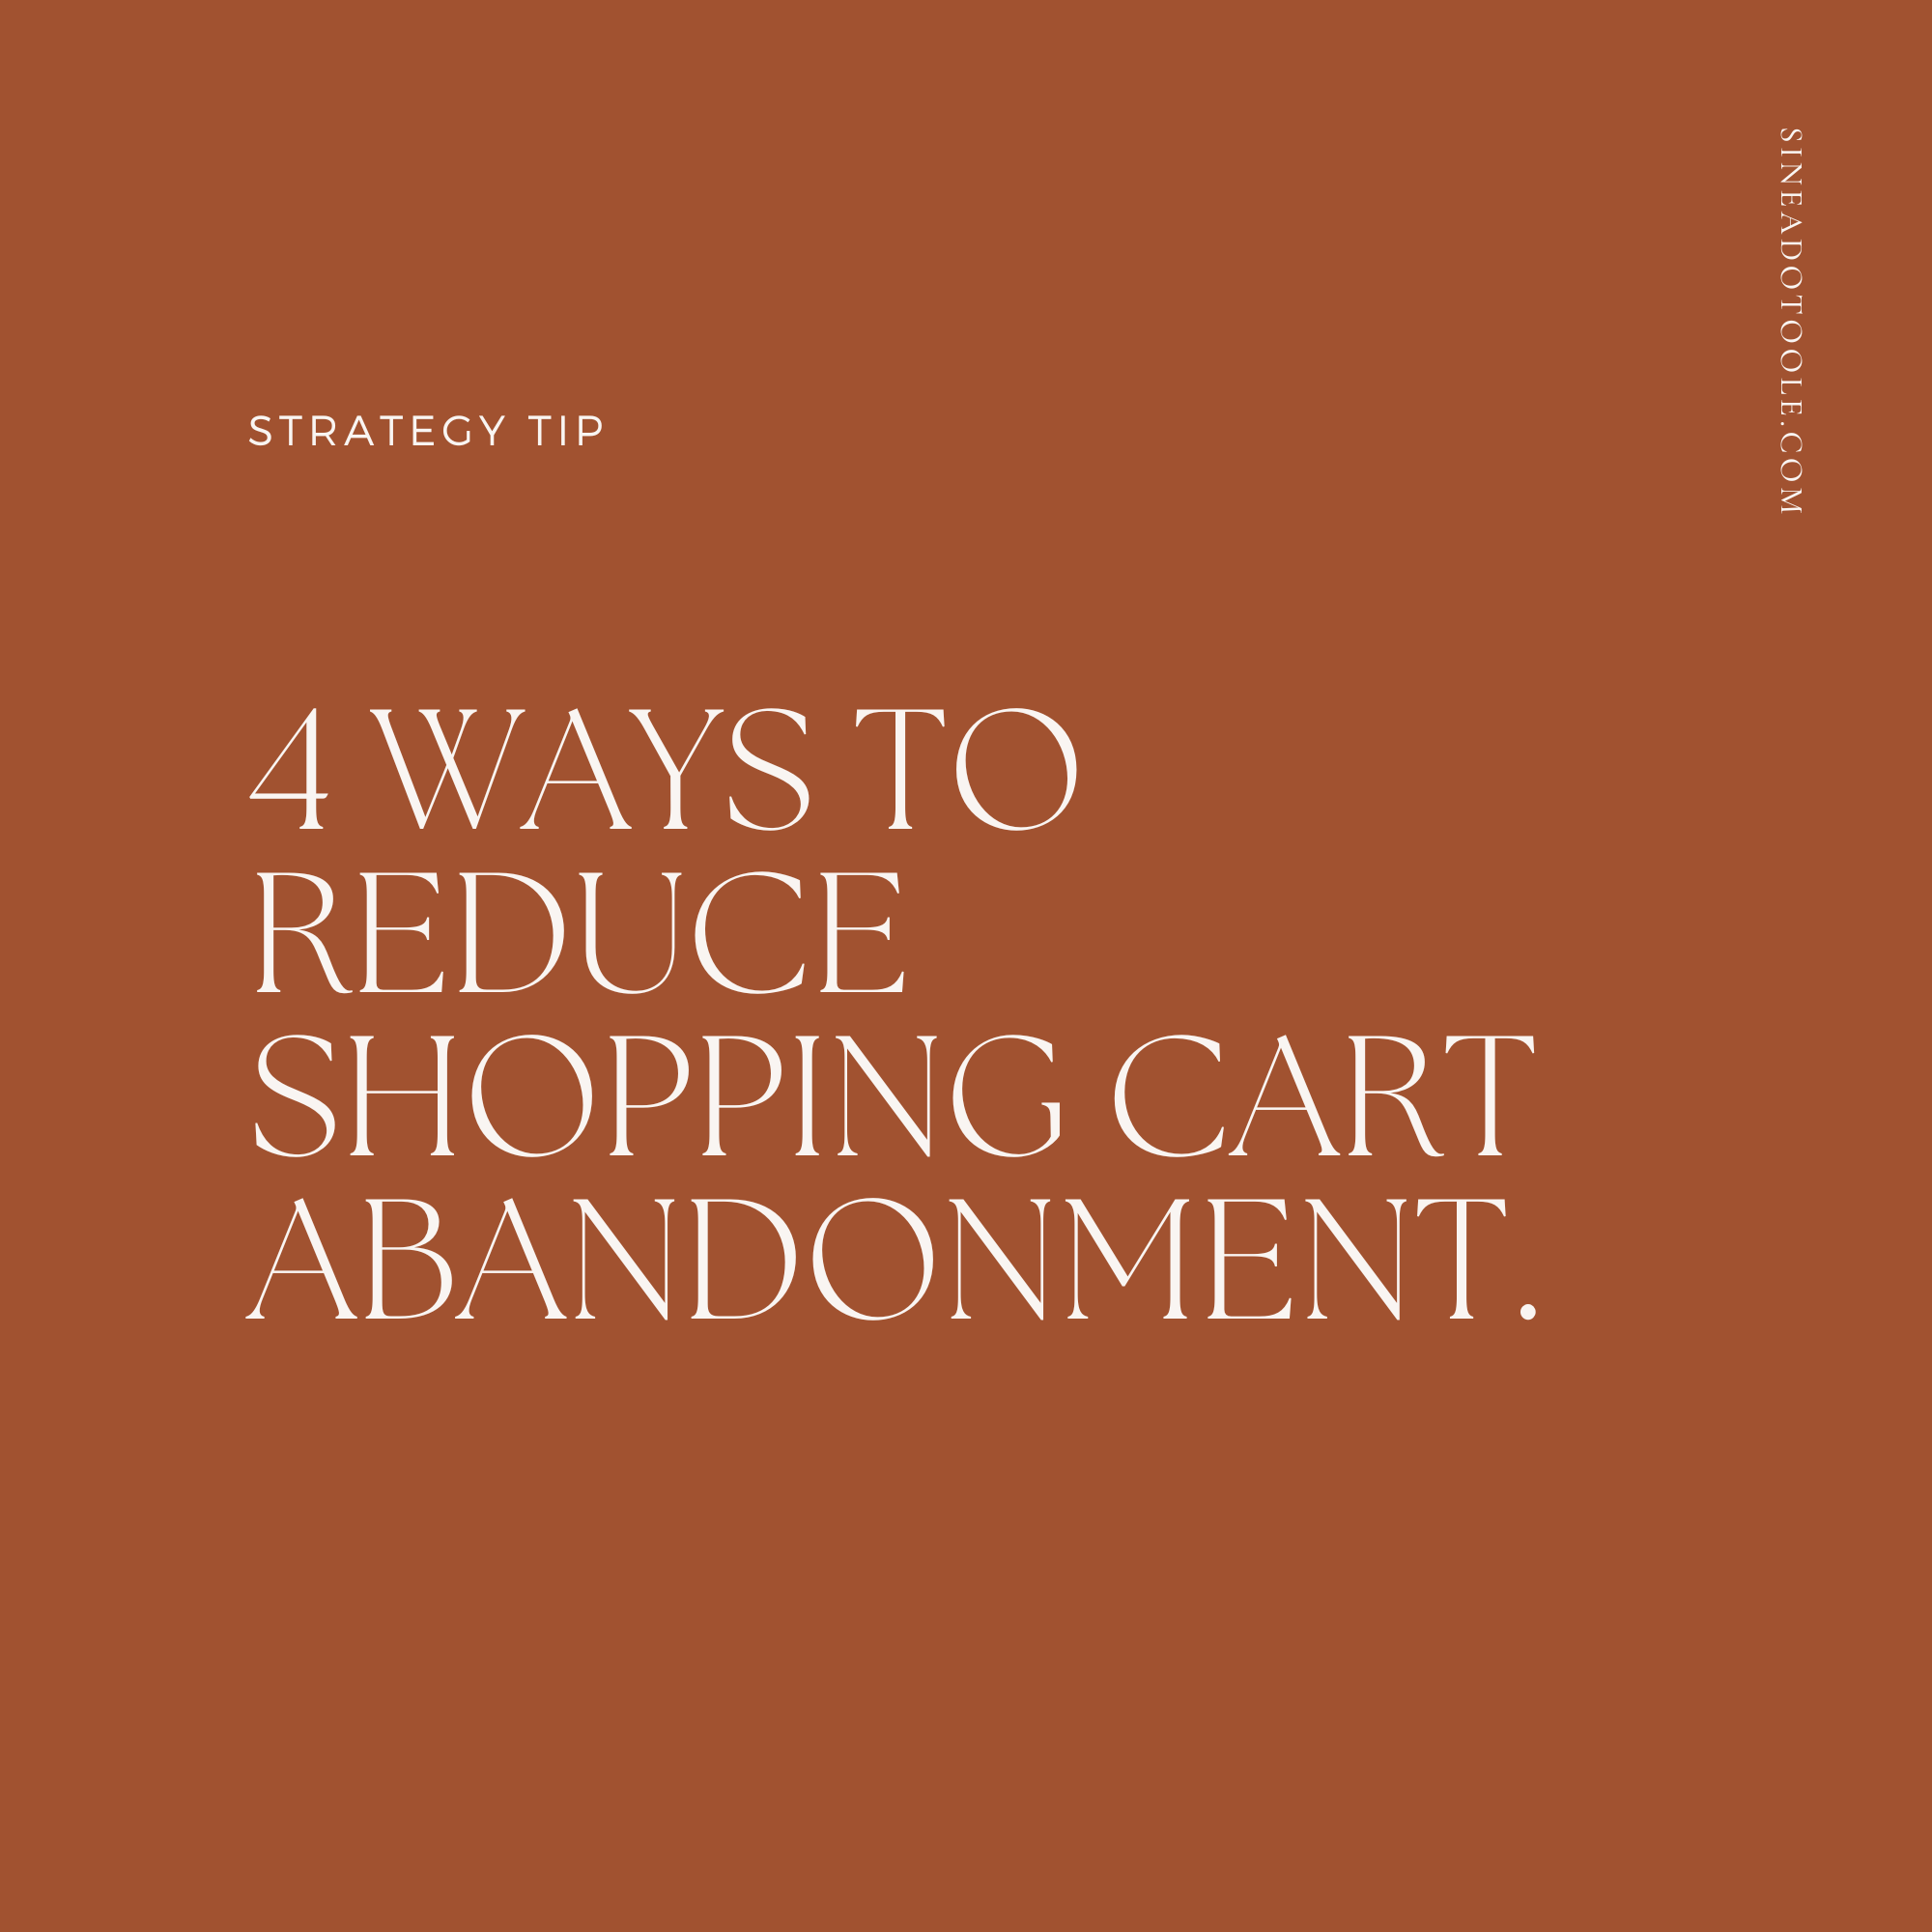 4 Ways to Reduce Shopping Cart Abandonment